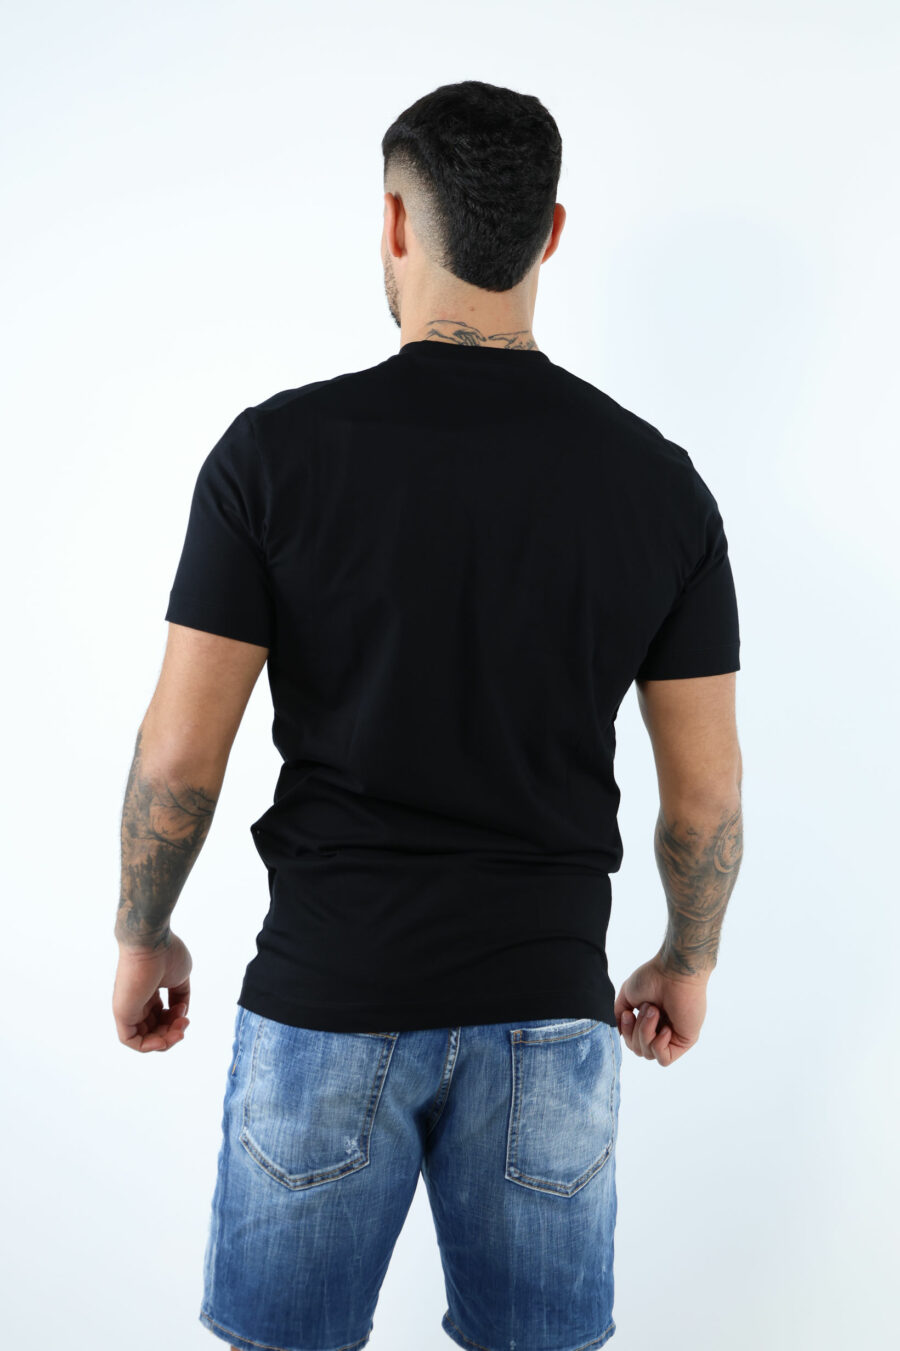 Schwarzes T-shirt mit Minilogo "ceresio 9, milano" - 106879